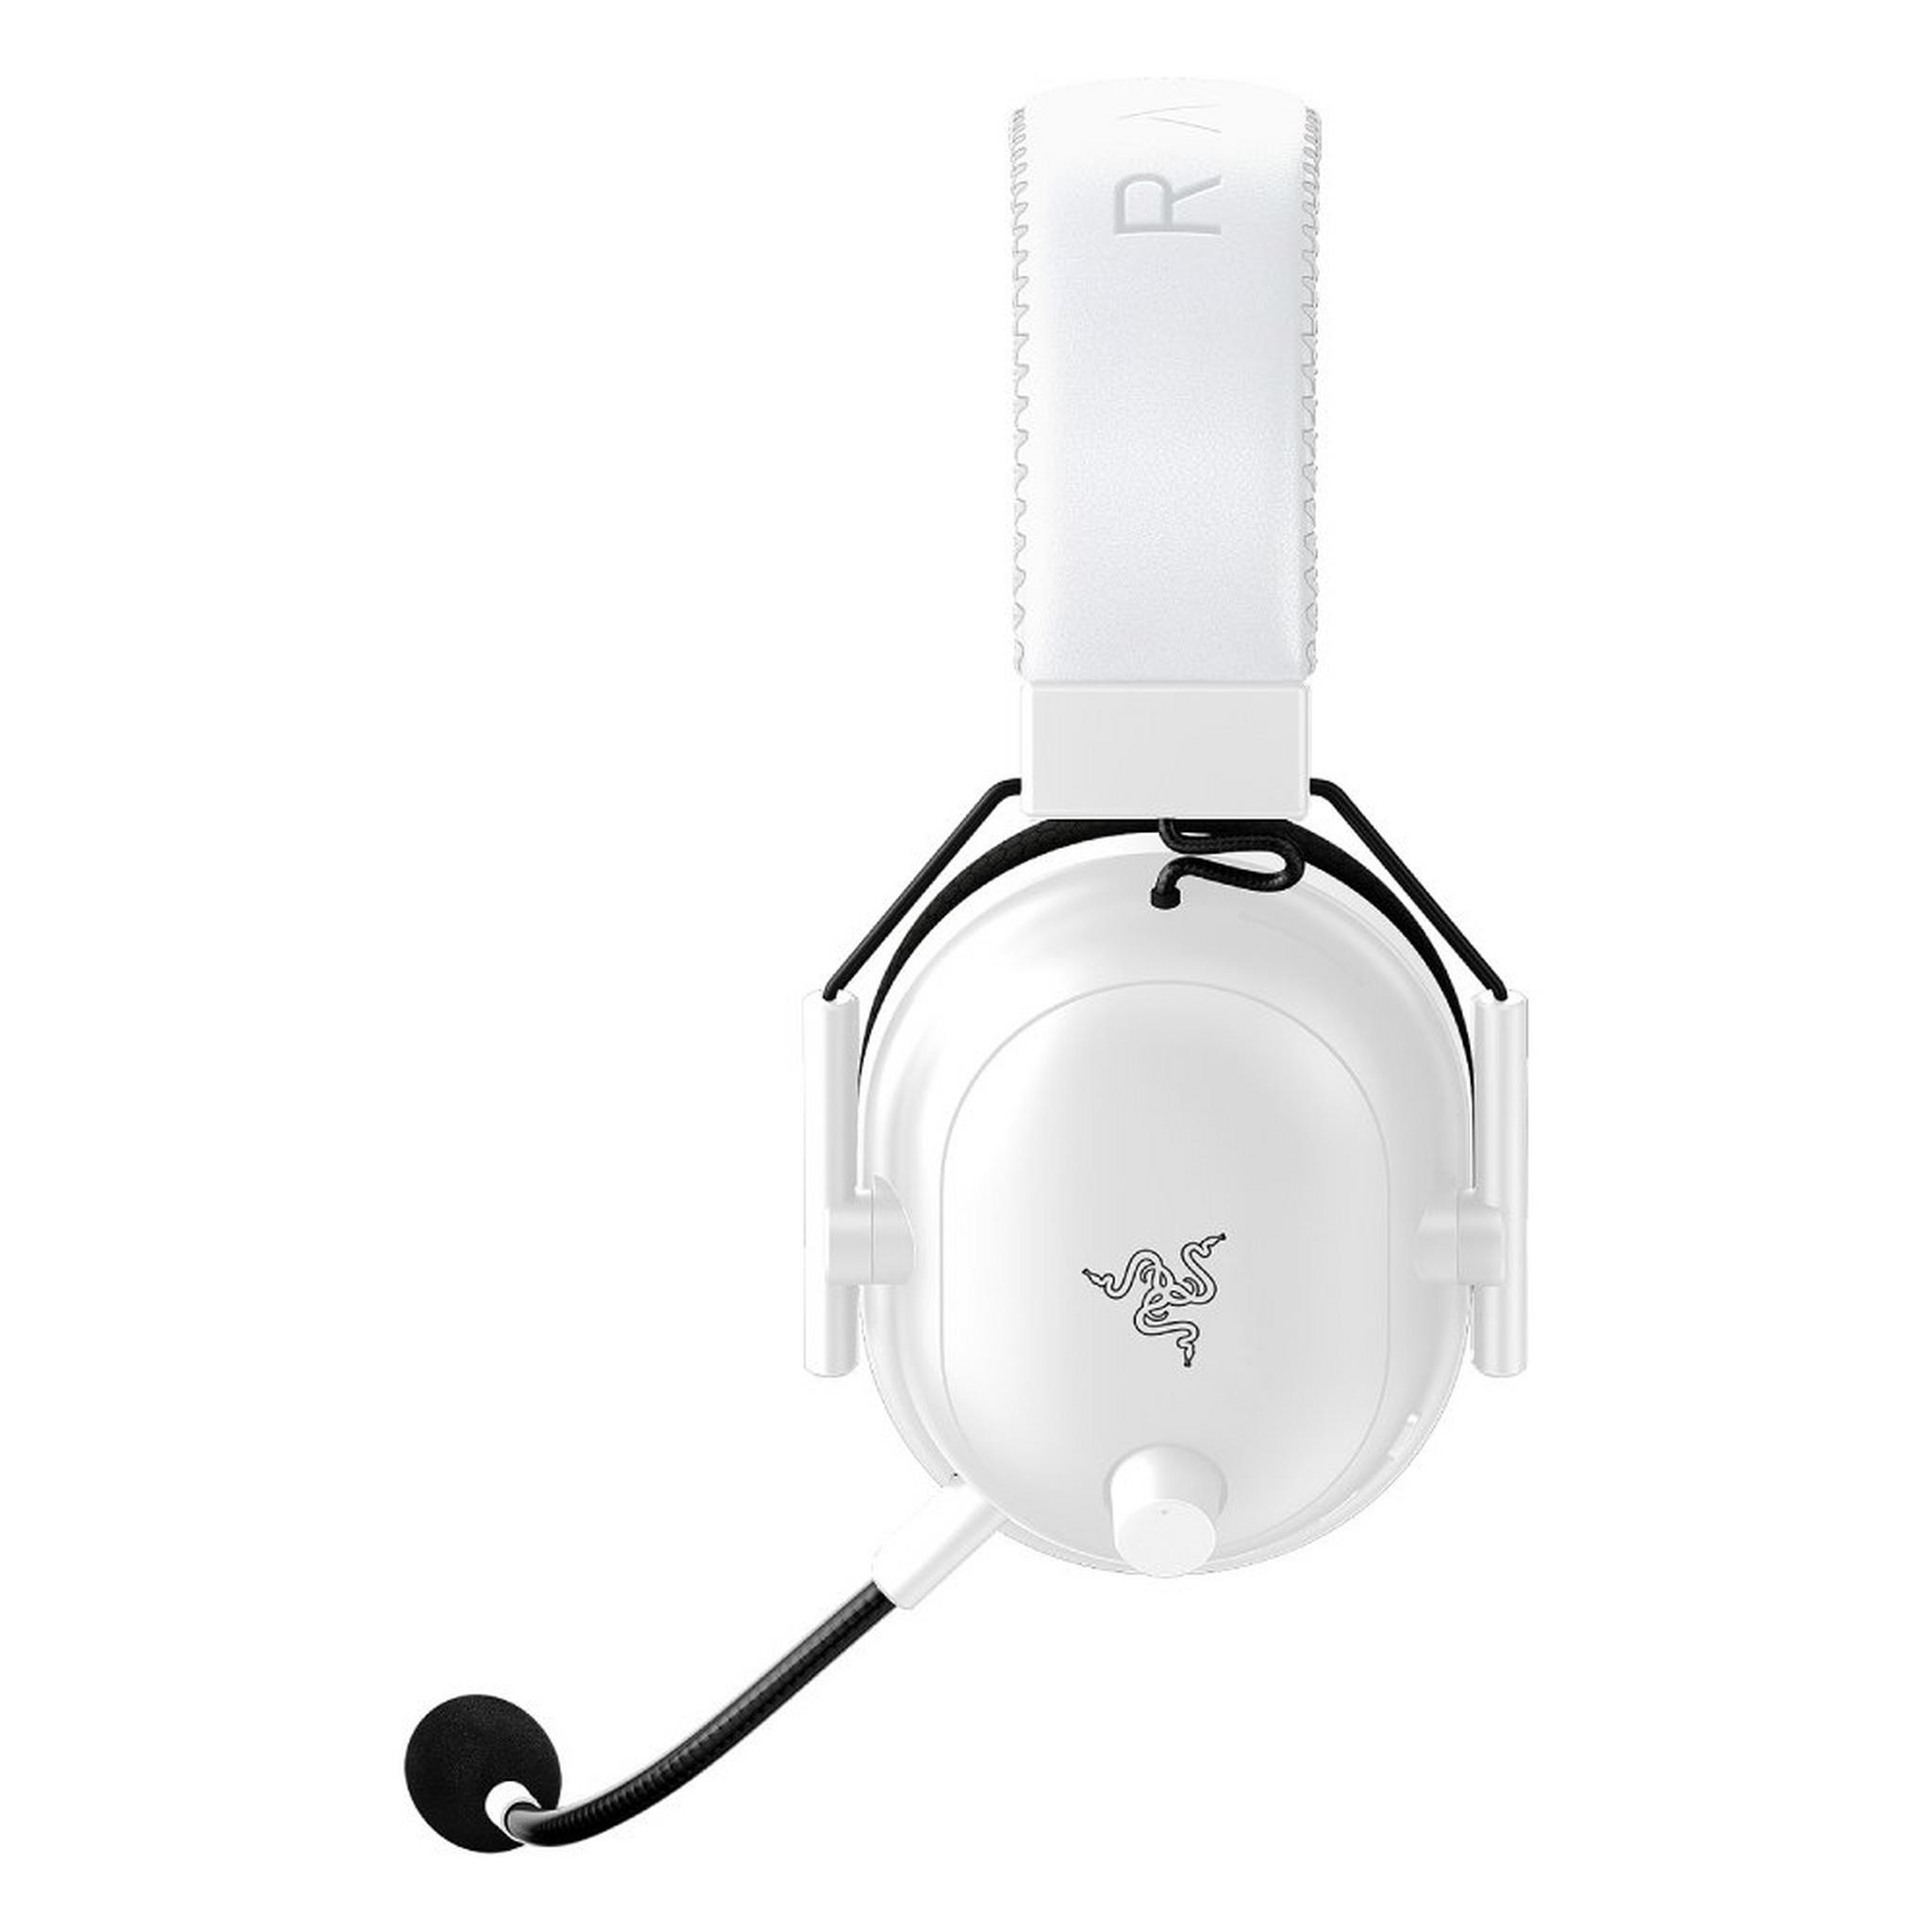 Razer BlackShark V2 X Gaming Headset - White